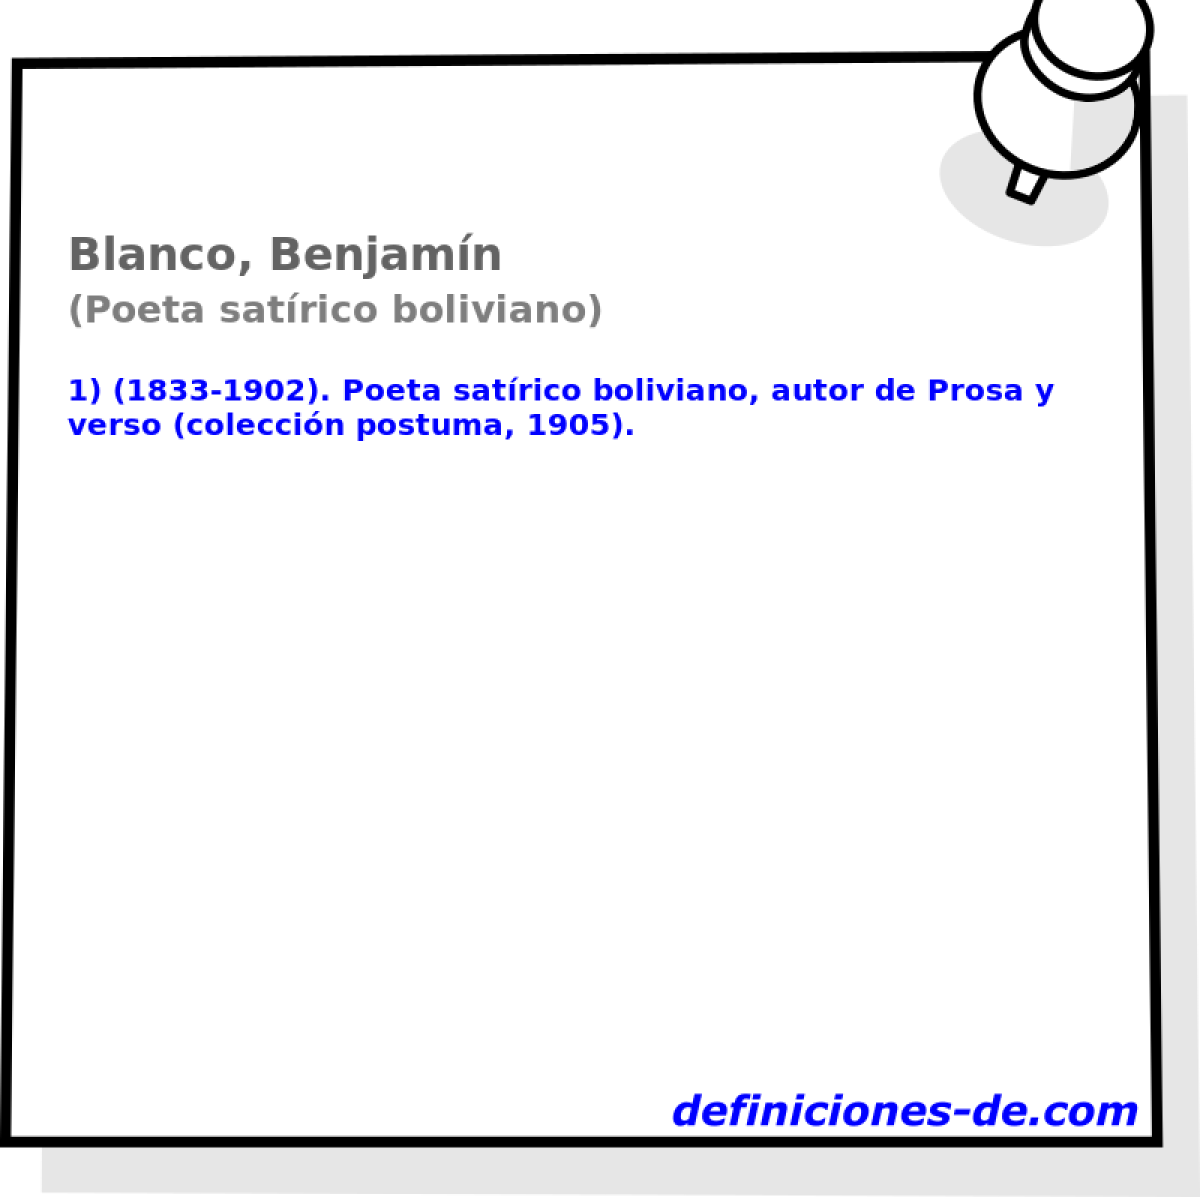 Blanco, Benjamn (Poeta satrico boliviano)